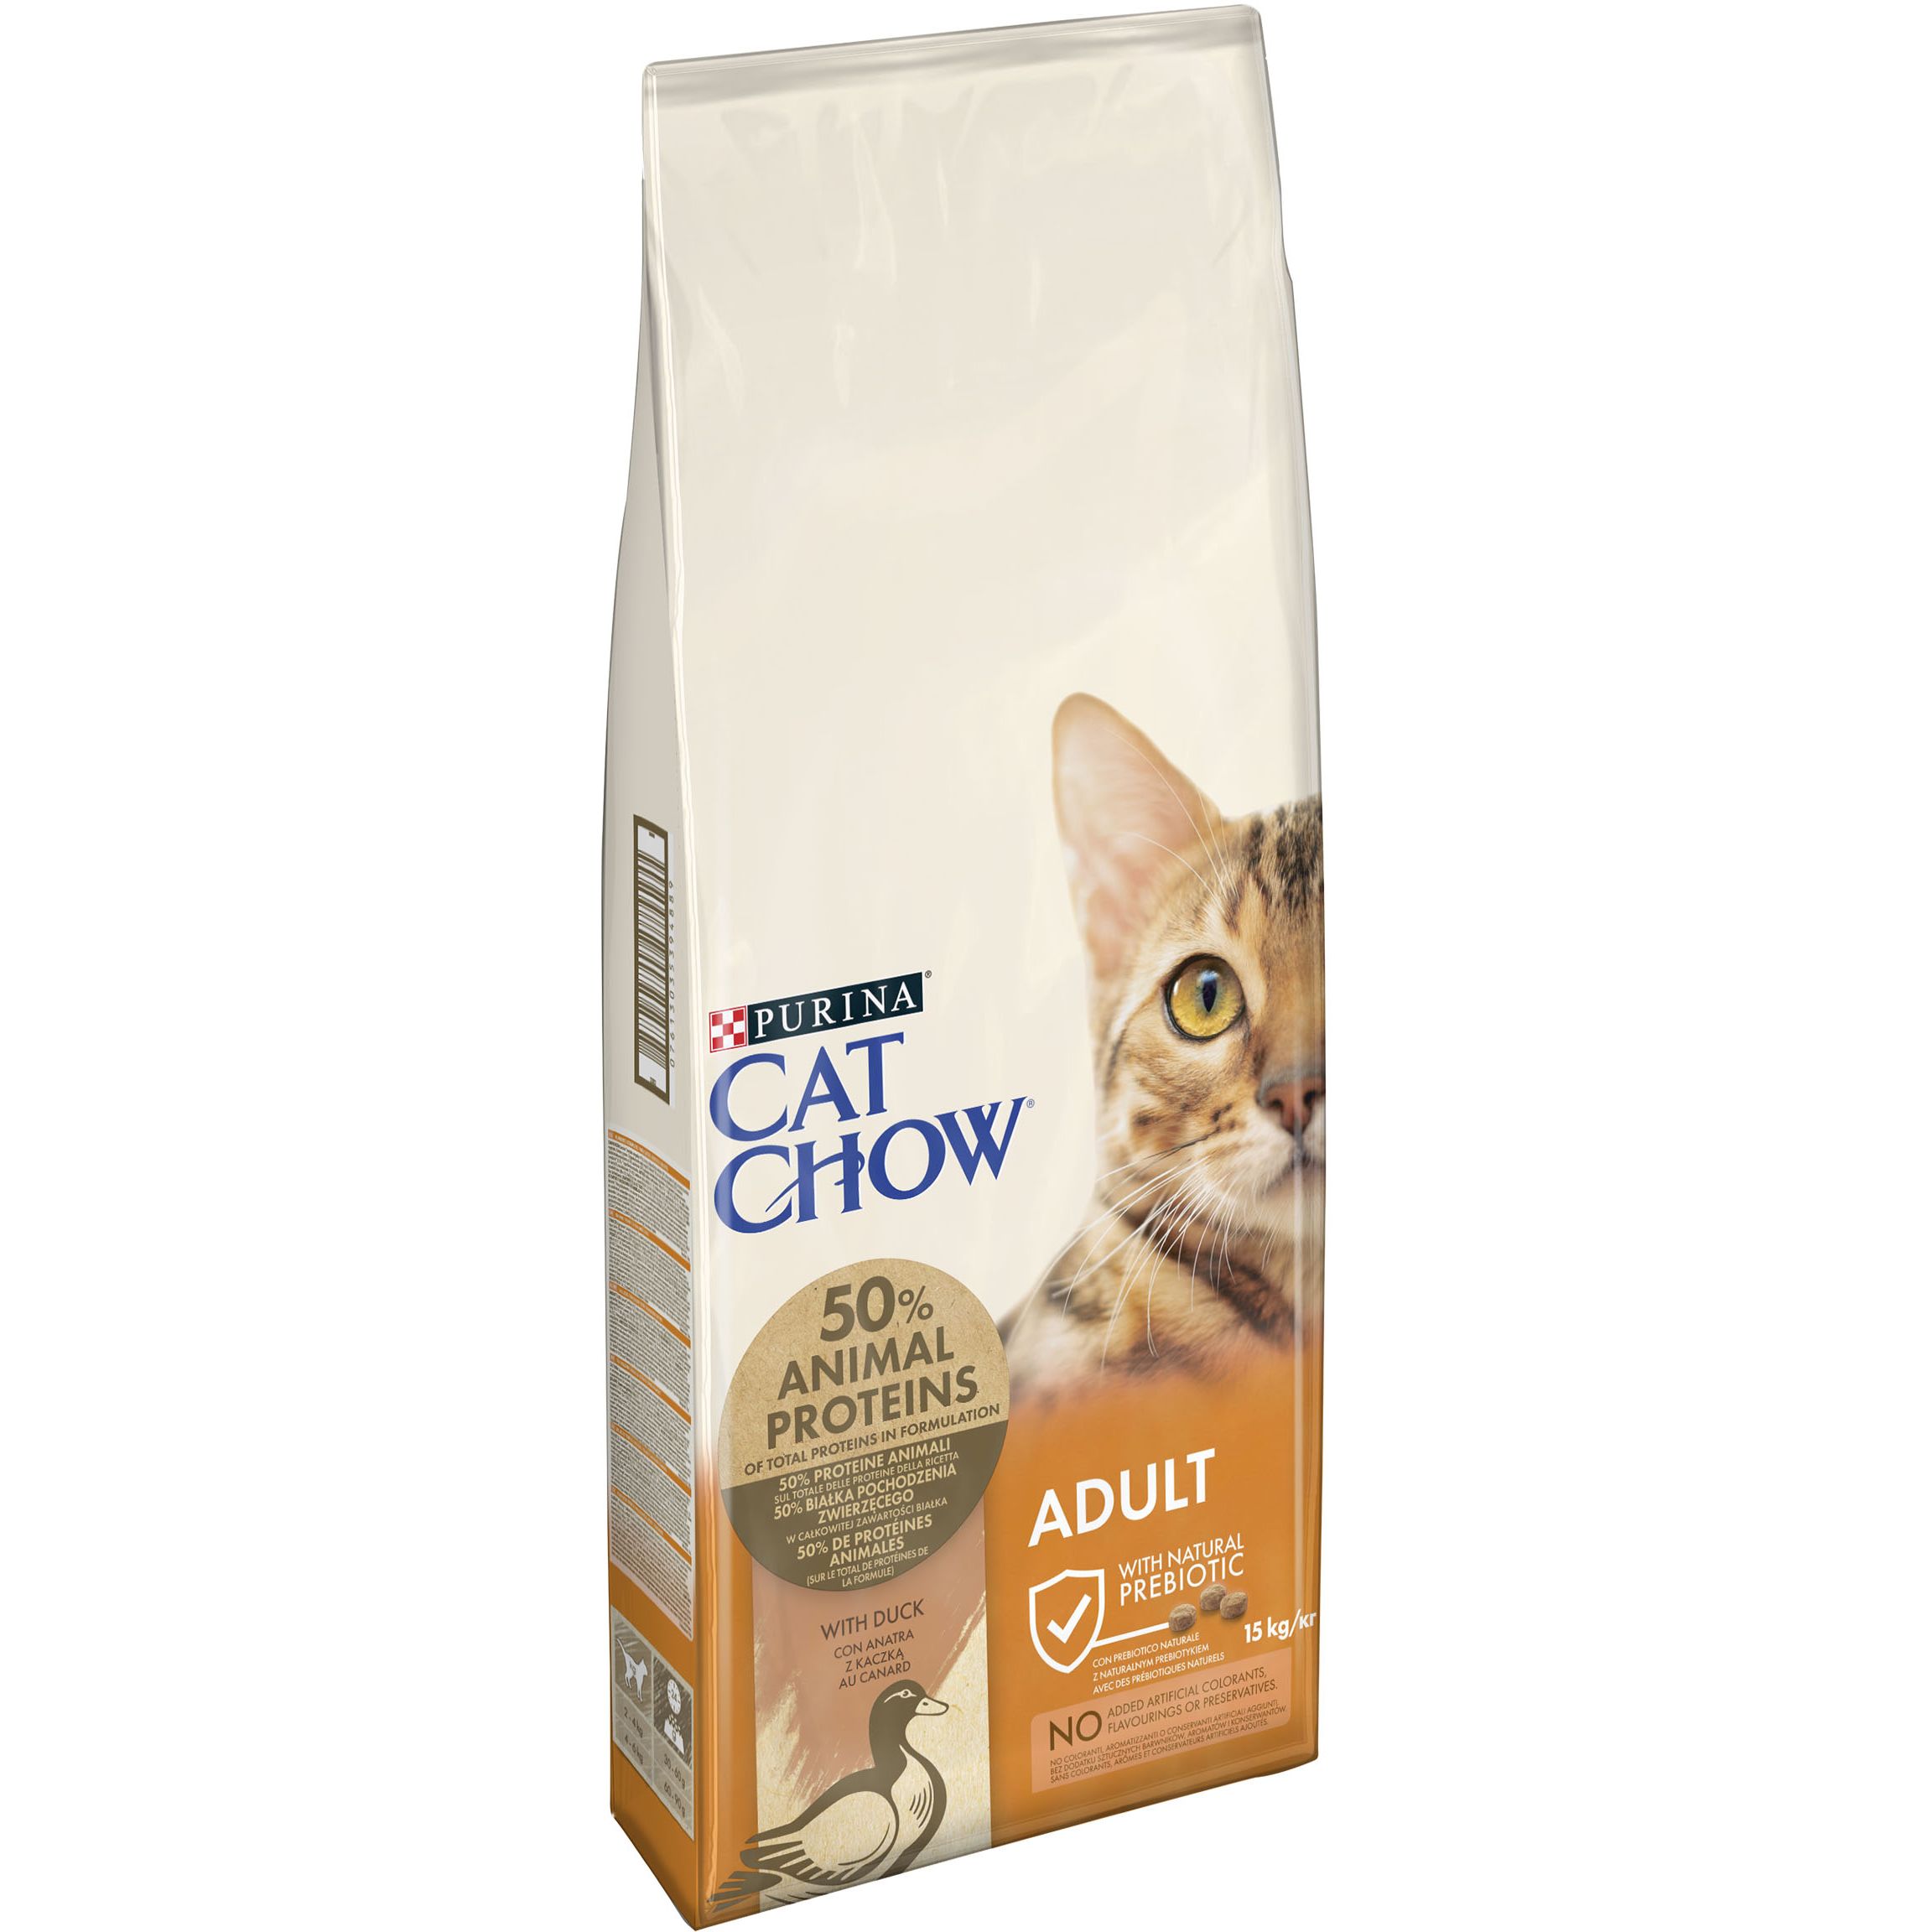 Сухой корм для кошек Cat Chow Adult с уткой 15 кг. - фото 3